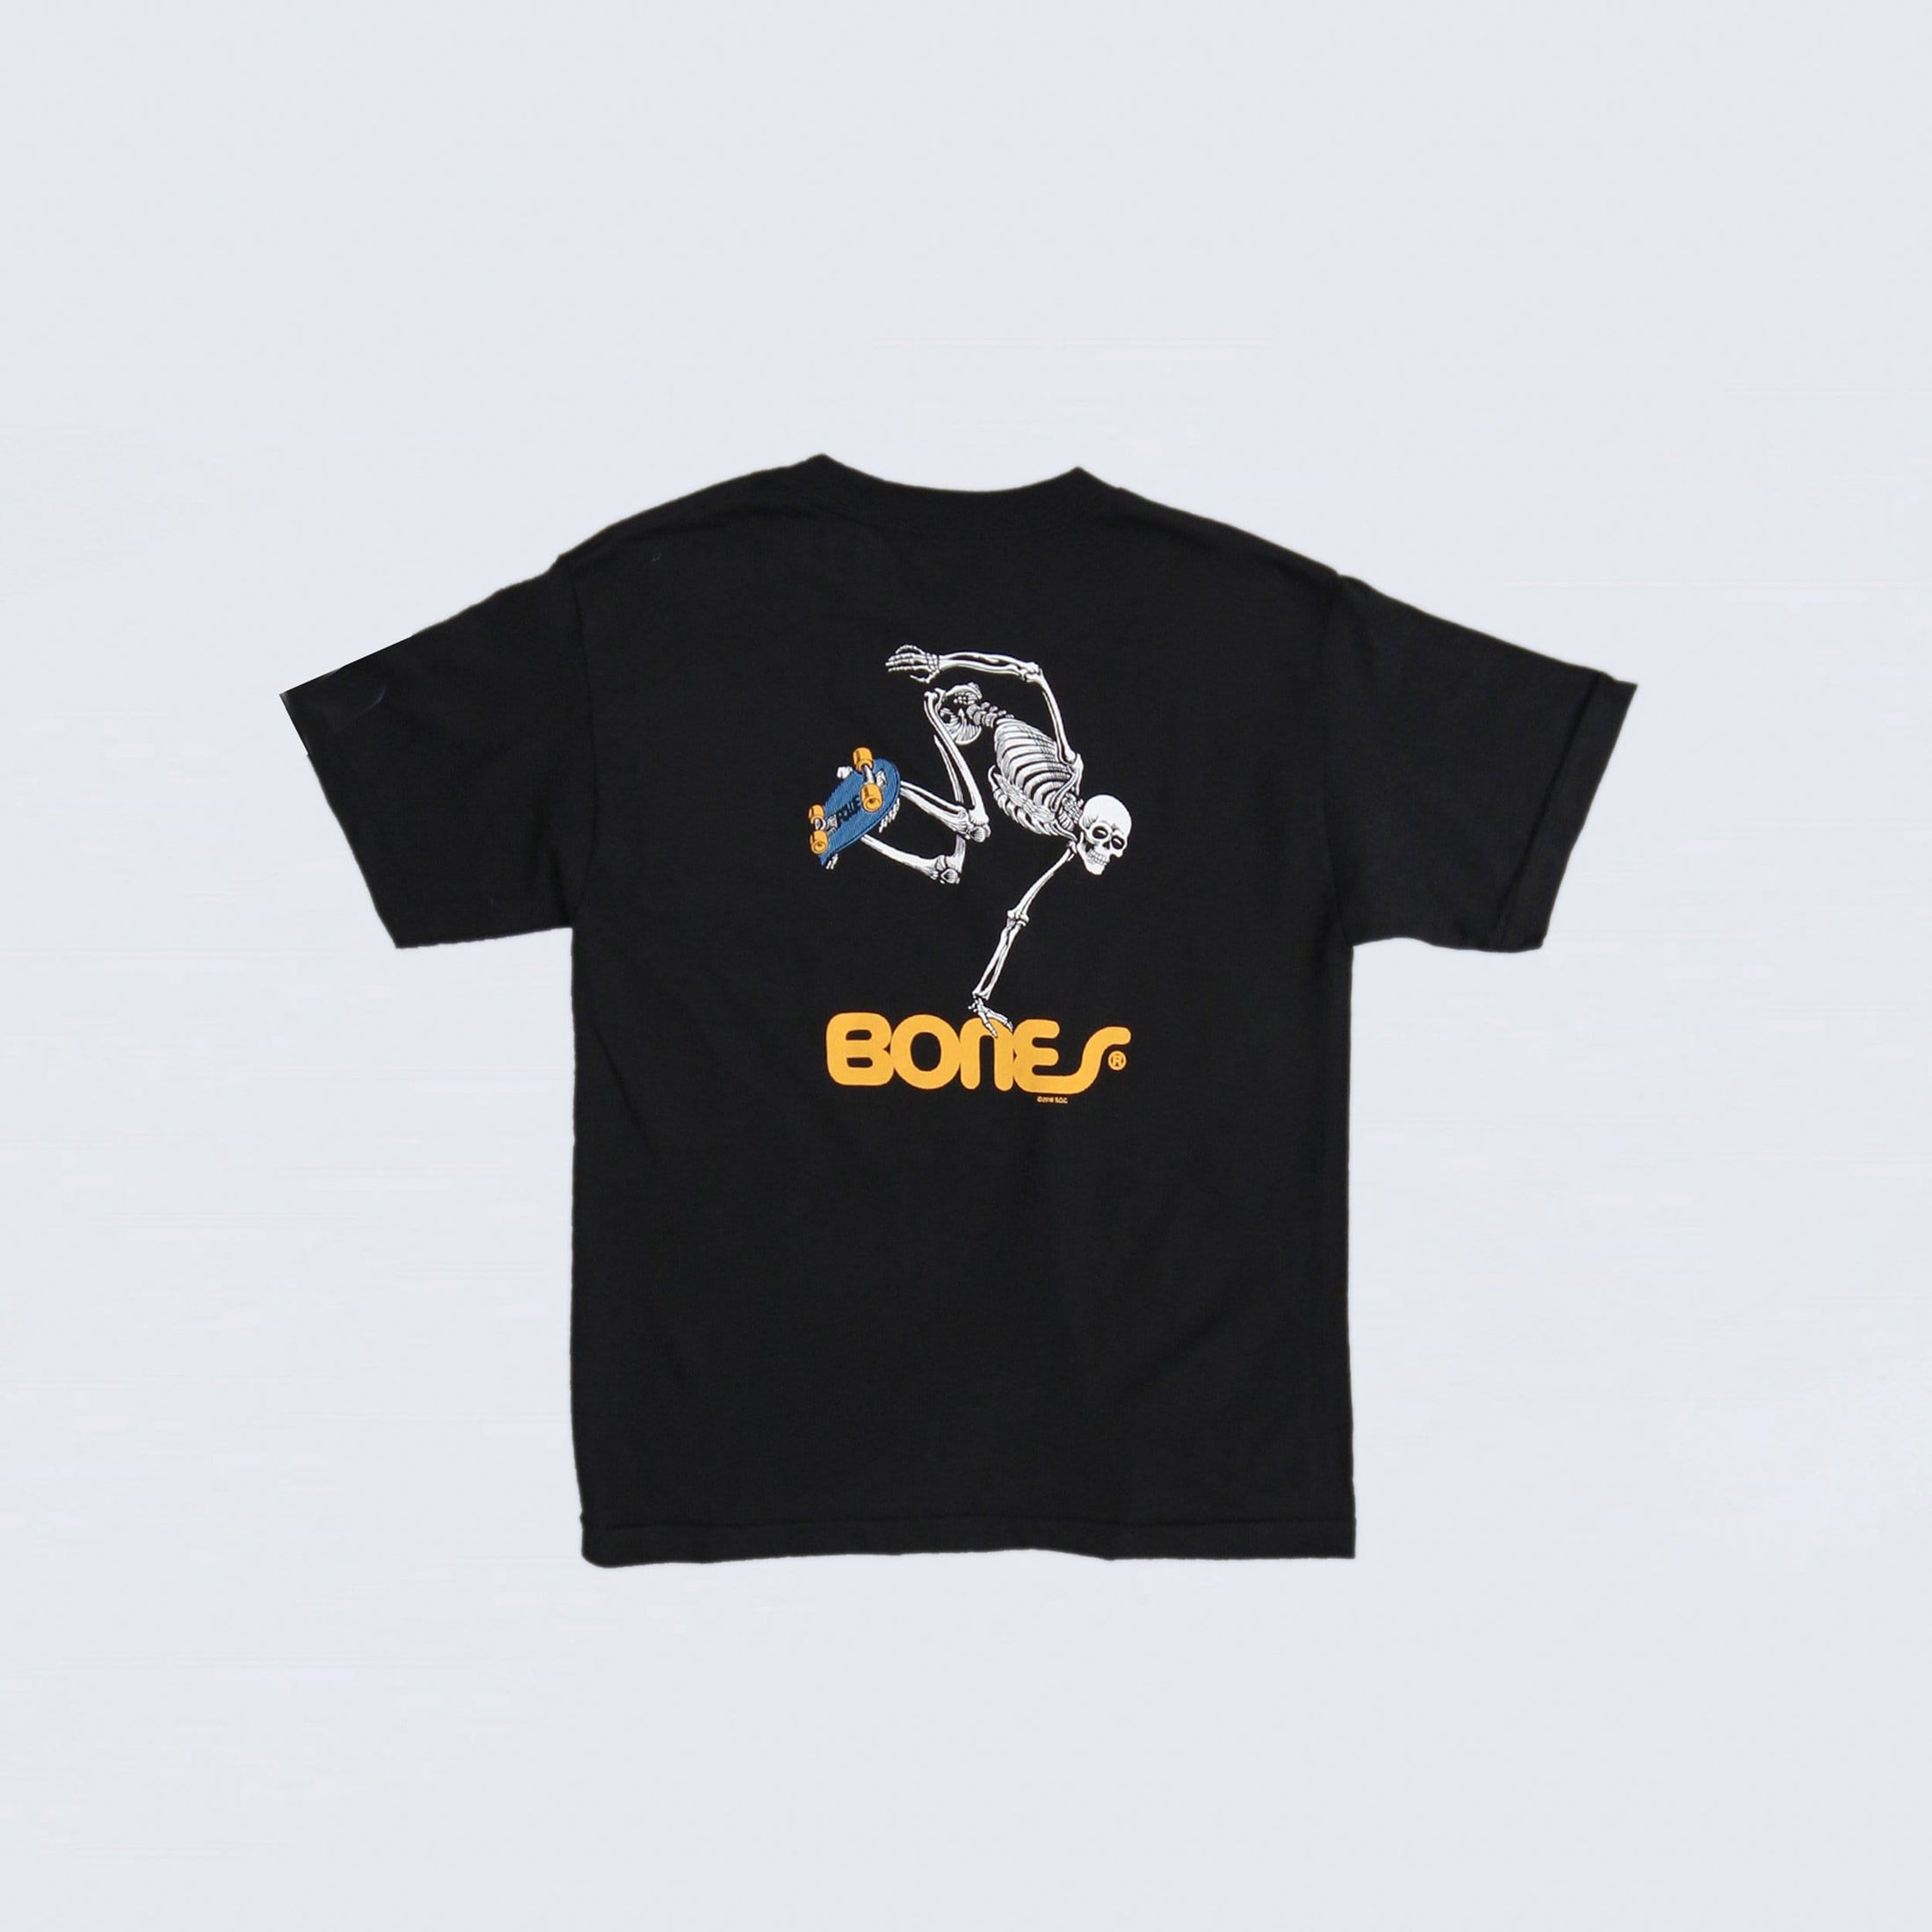 Powell Peralta Skateboard Skeleton Youth T-Shirt Black